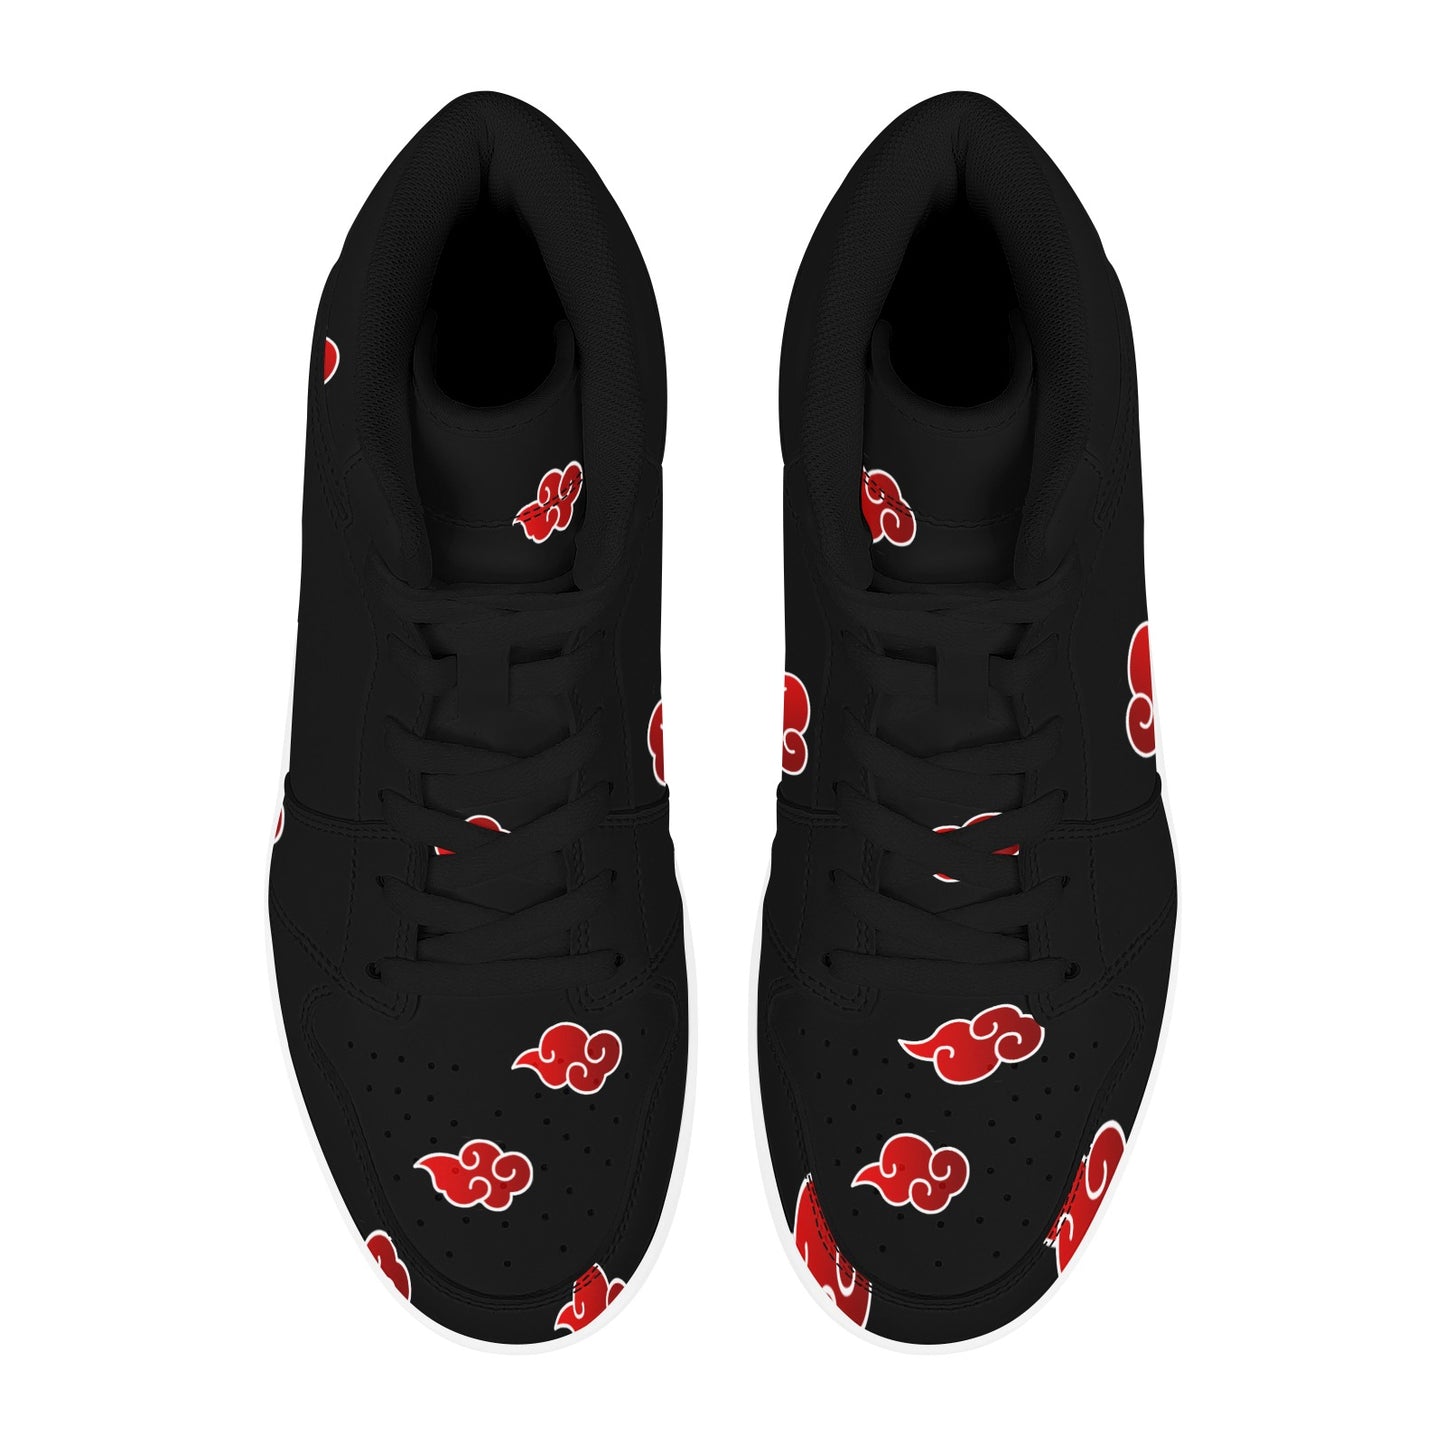 Black High Top Sneakers  Red Clouds Pattern High Top Sneakers Men's High Top Sneakers